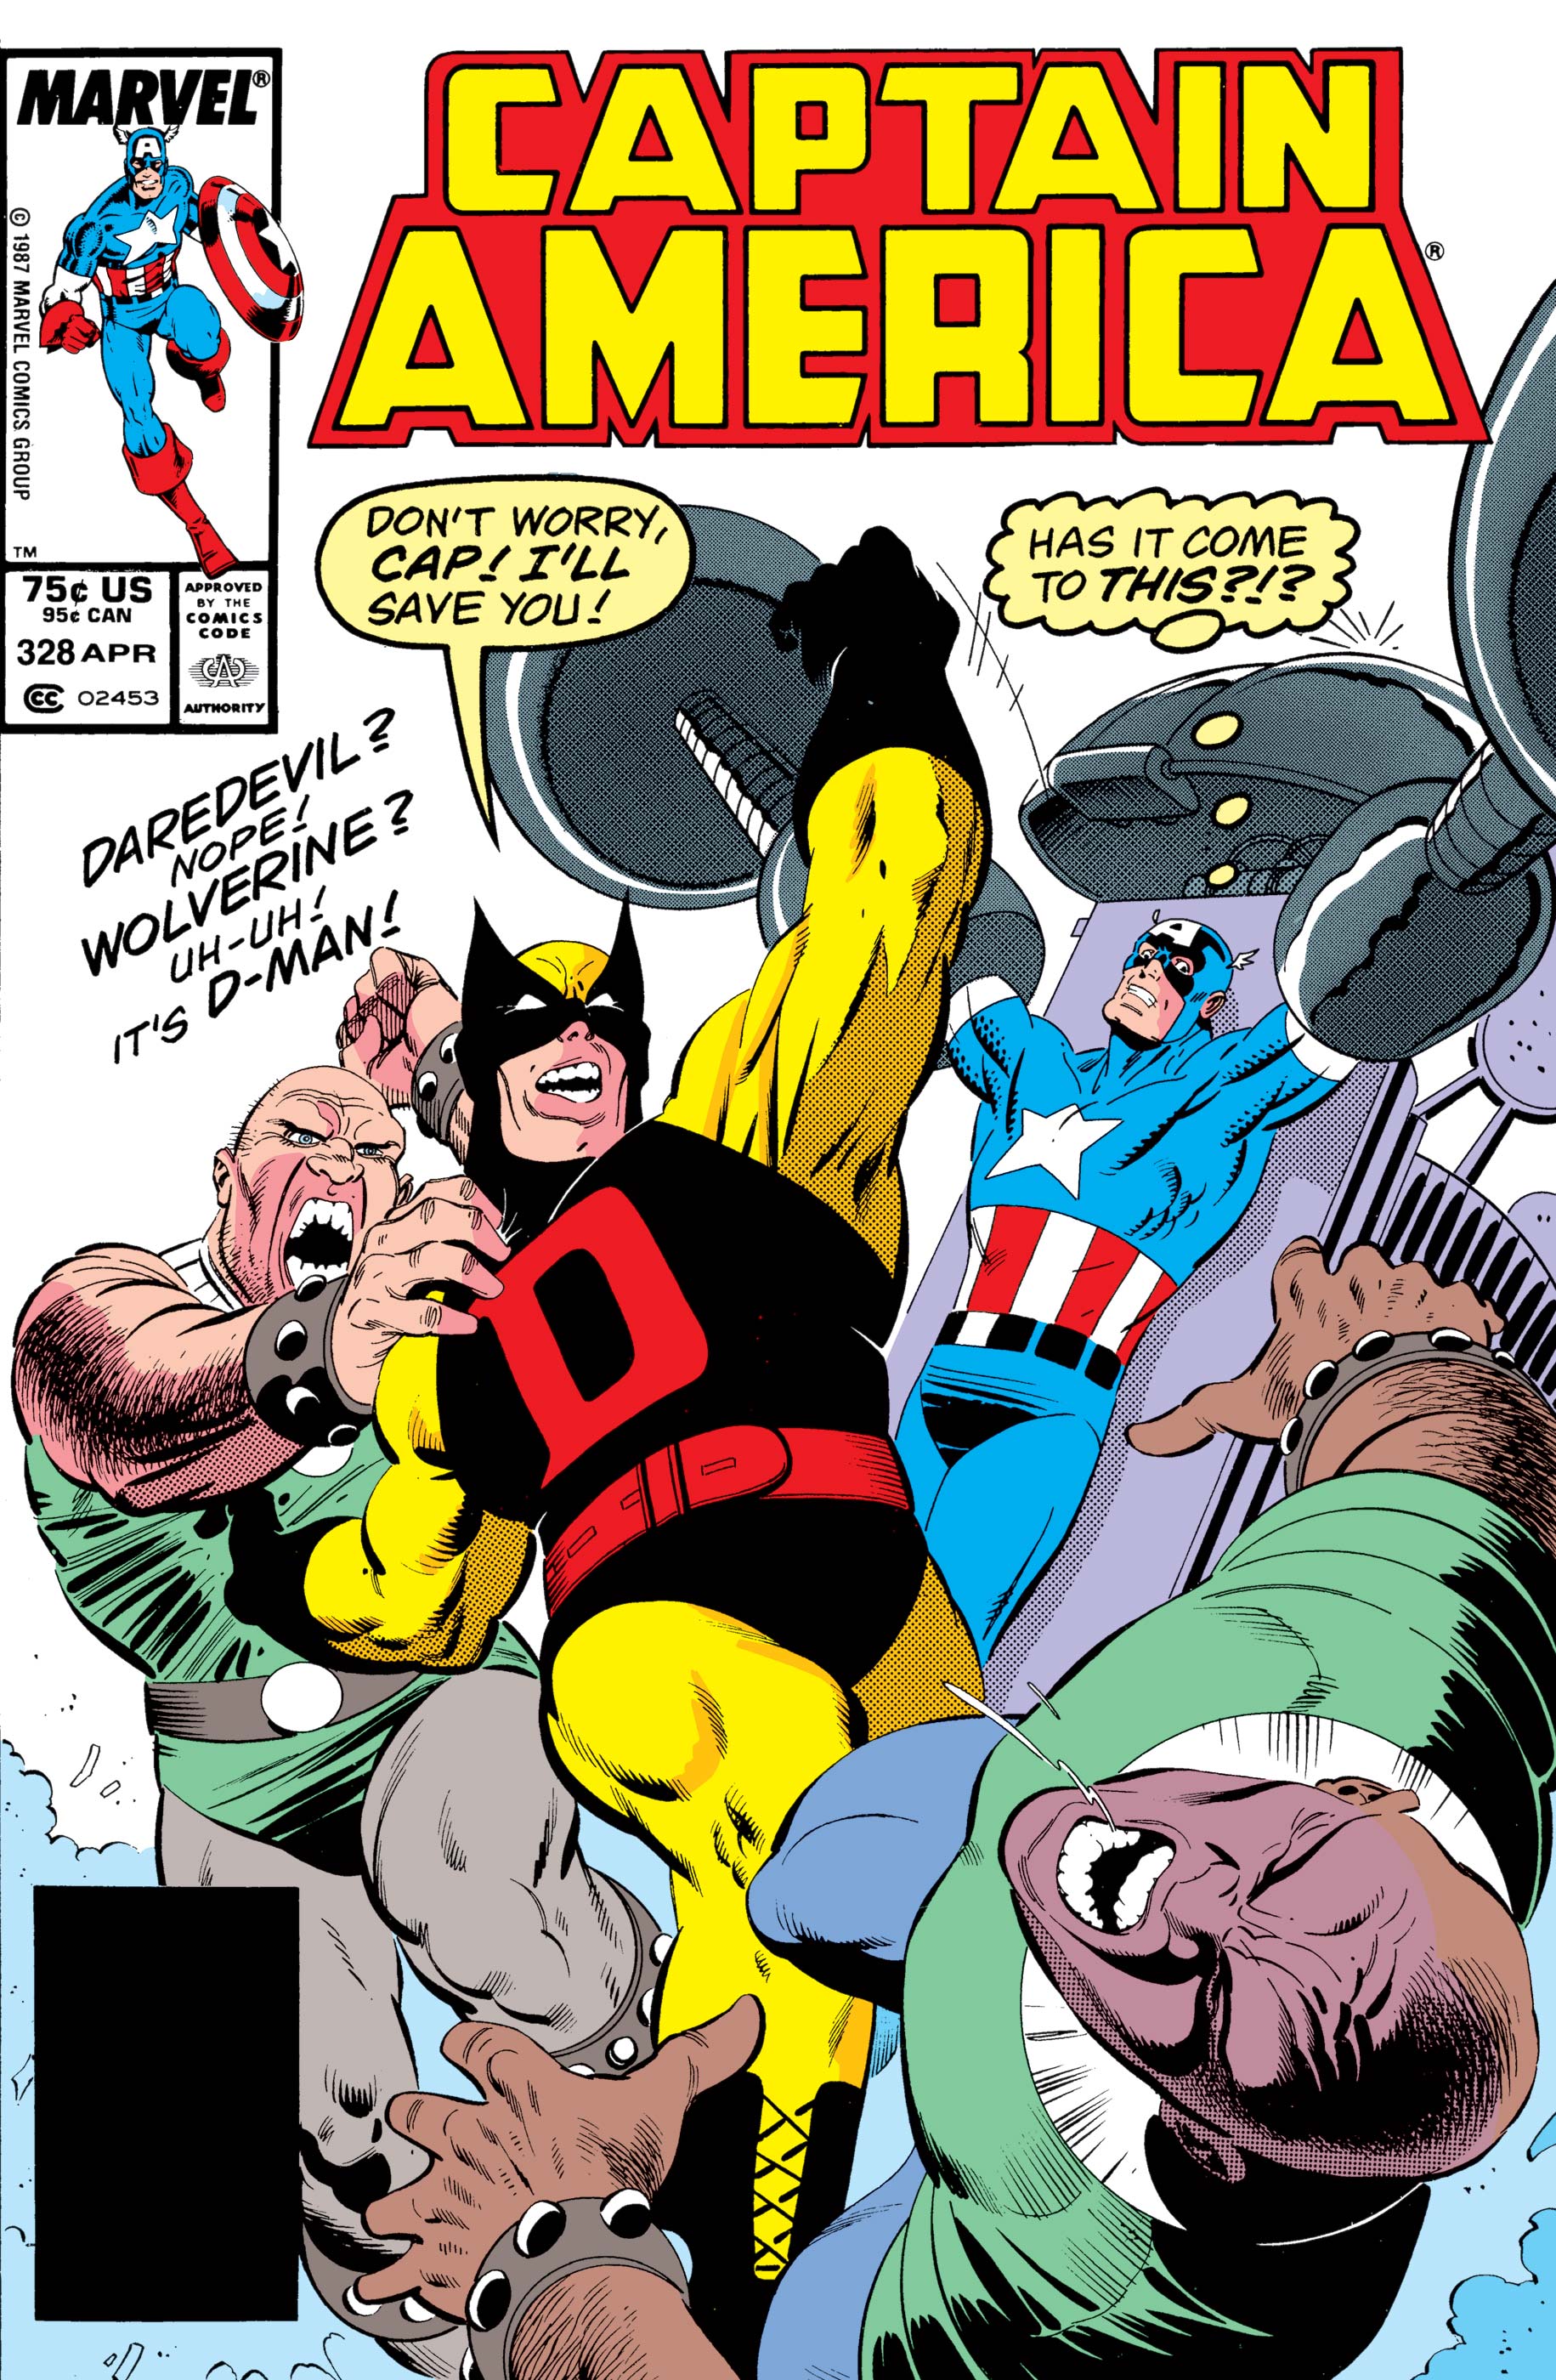 Captain America (1968) #328 | Comic Issues | Marvel